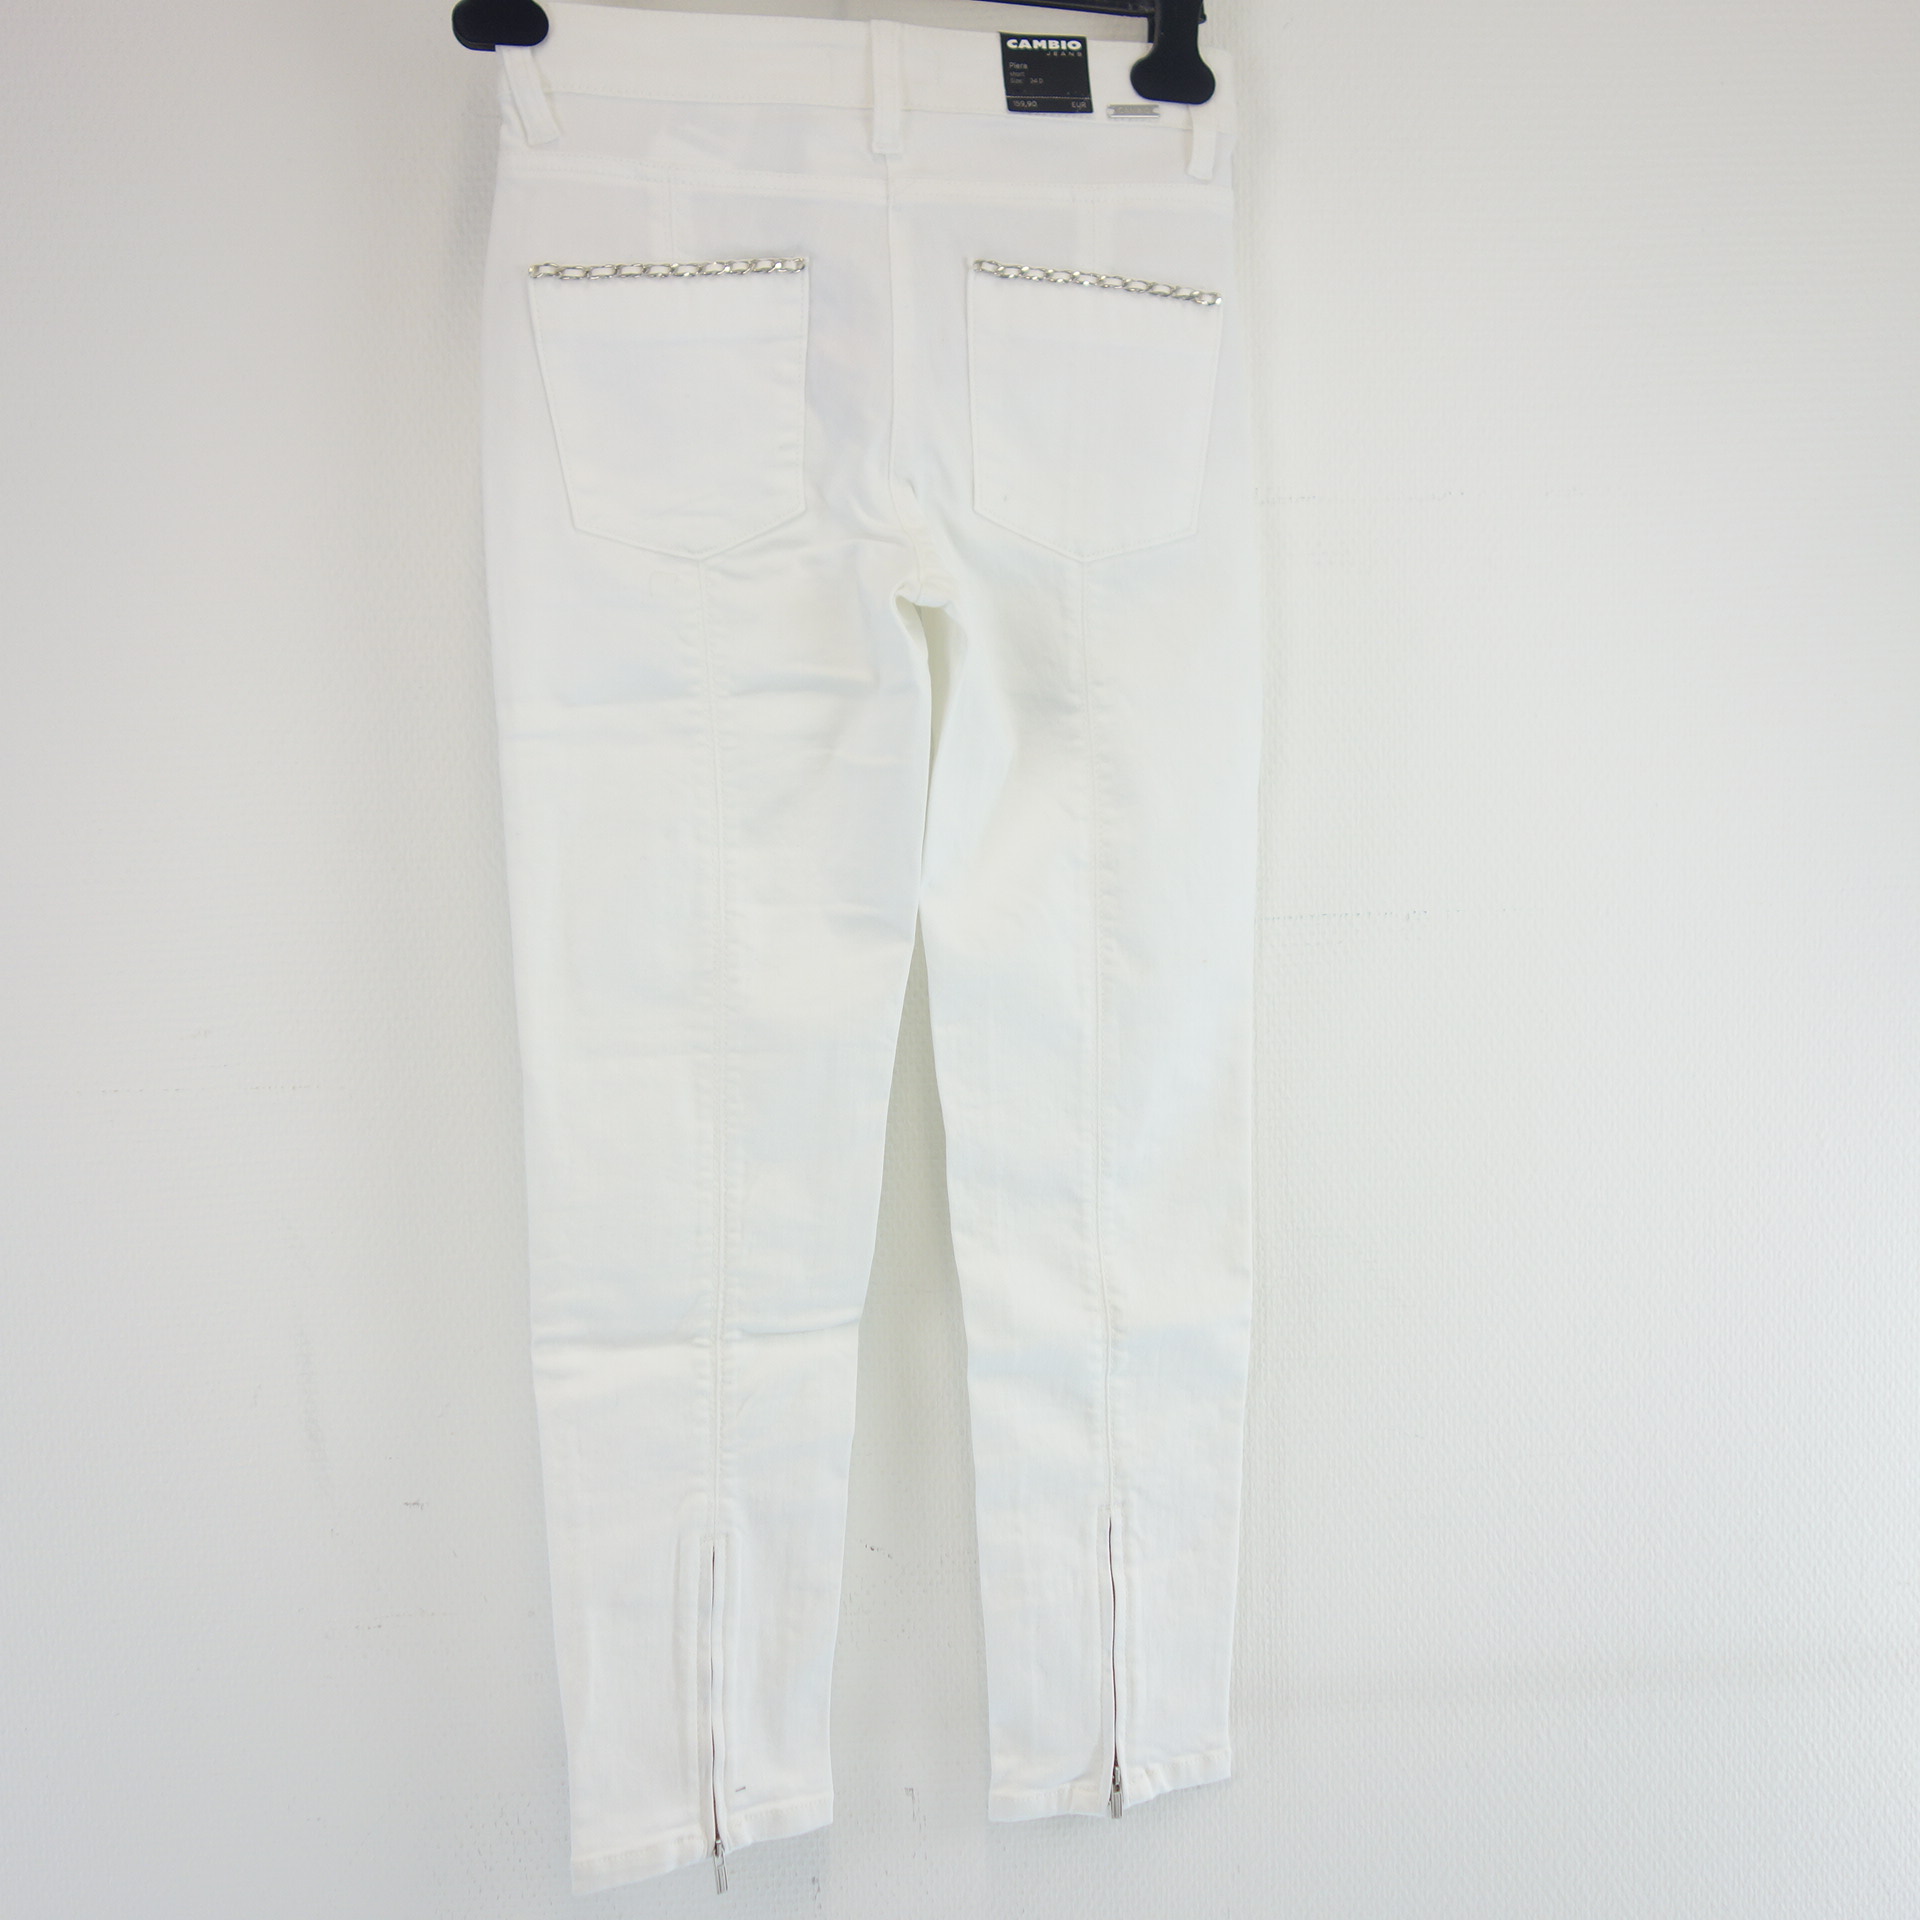 CAMBIO Damen Jeans Hose Jeanshose Weiß Modell Paris Short Größe 34 Slim